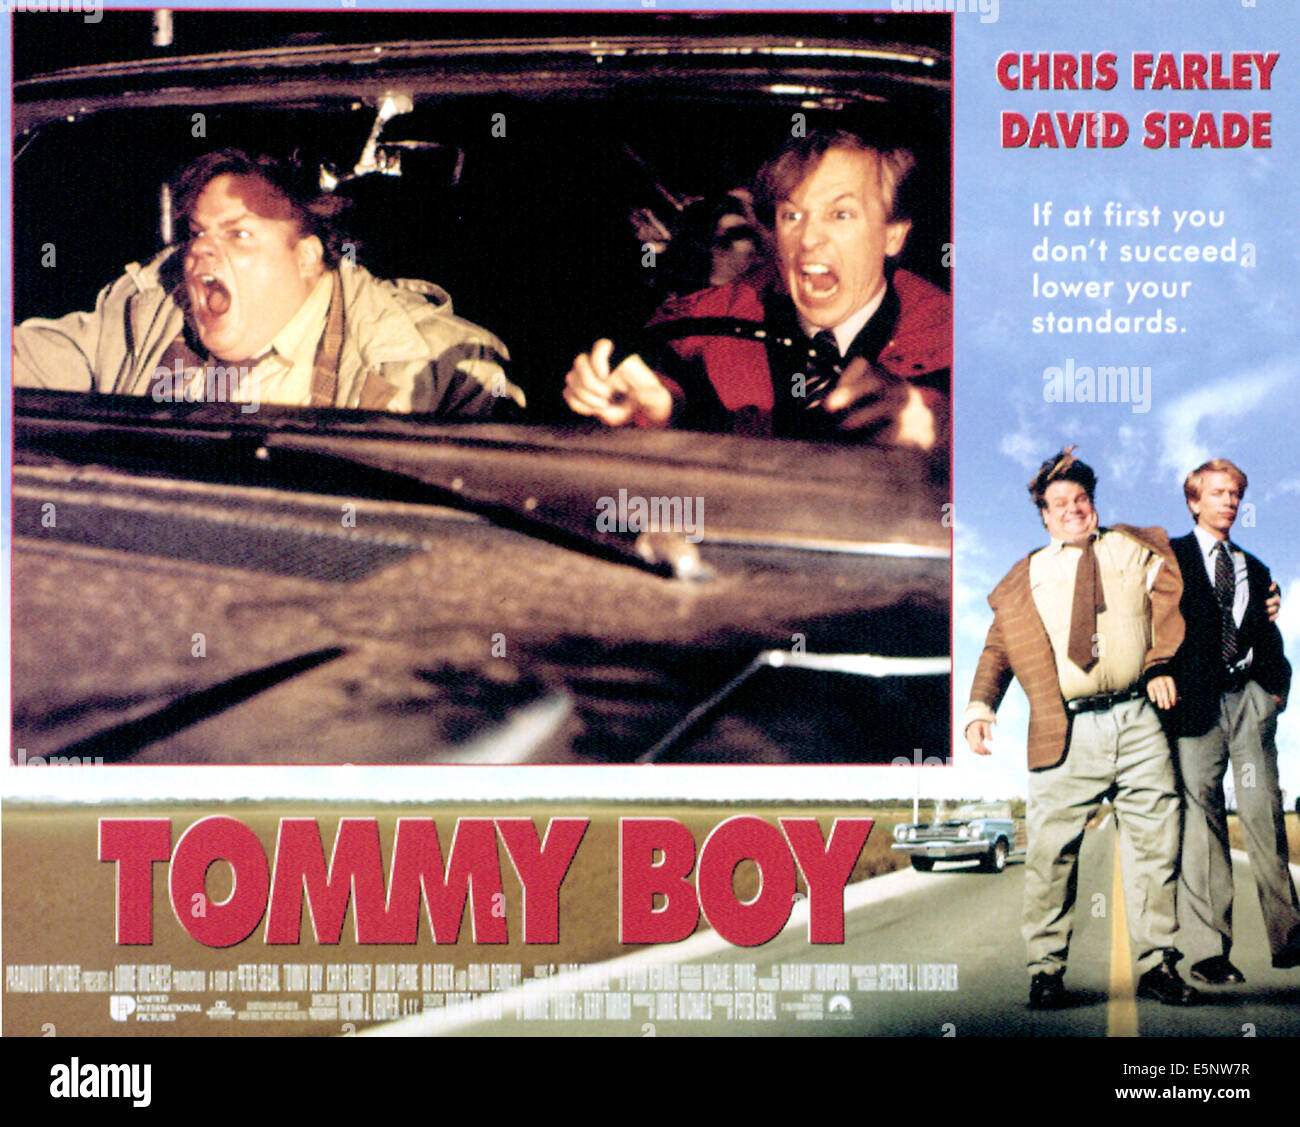 TOMMY BOY, Chris Farley e David Spade, lobby card, locandina, 1995. (C)Paramount Pictures/cortesia Everett Collection Foto Stock